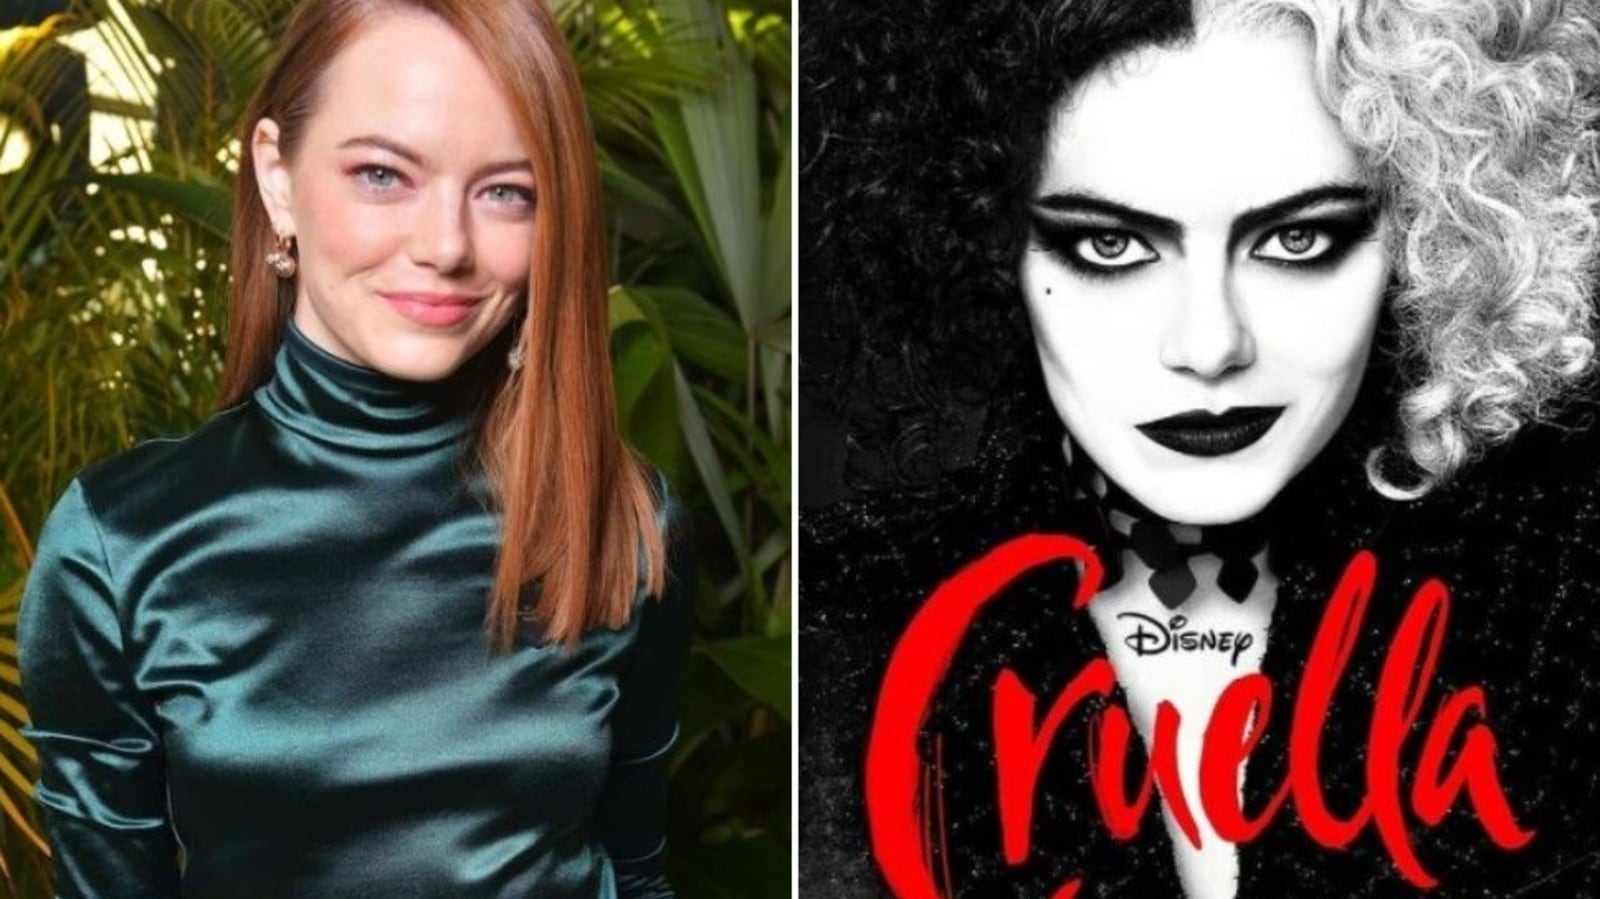 Everything we know so far about Disney's Emma Stone-led Cruella